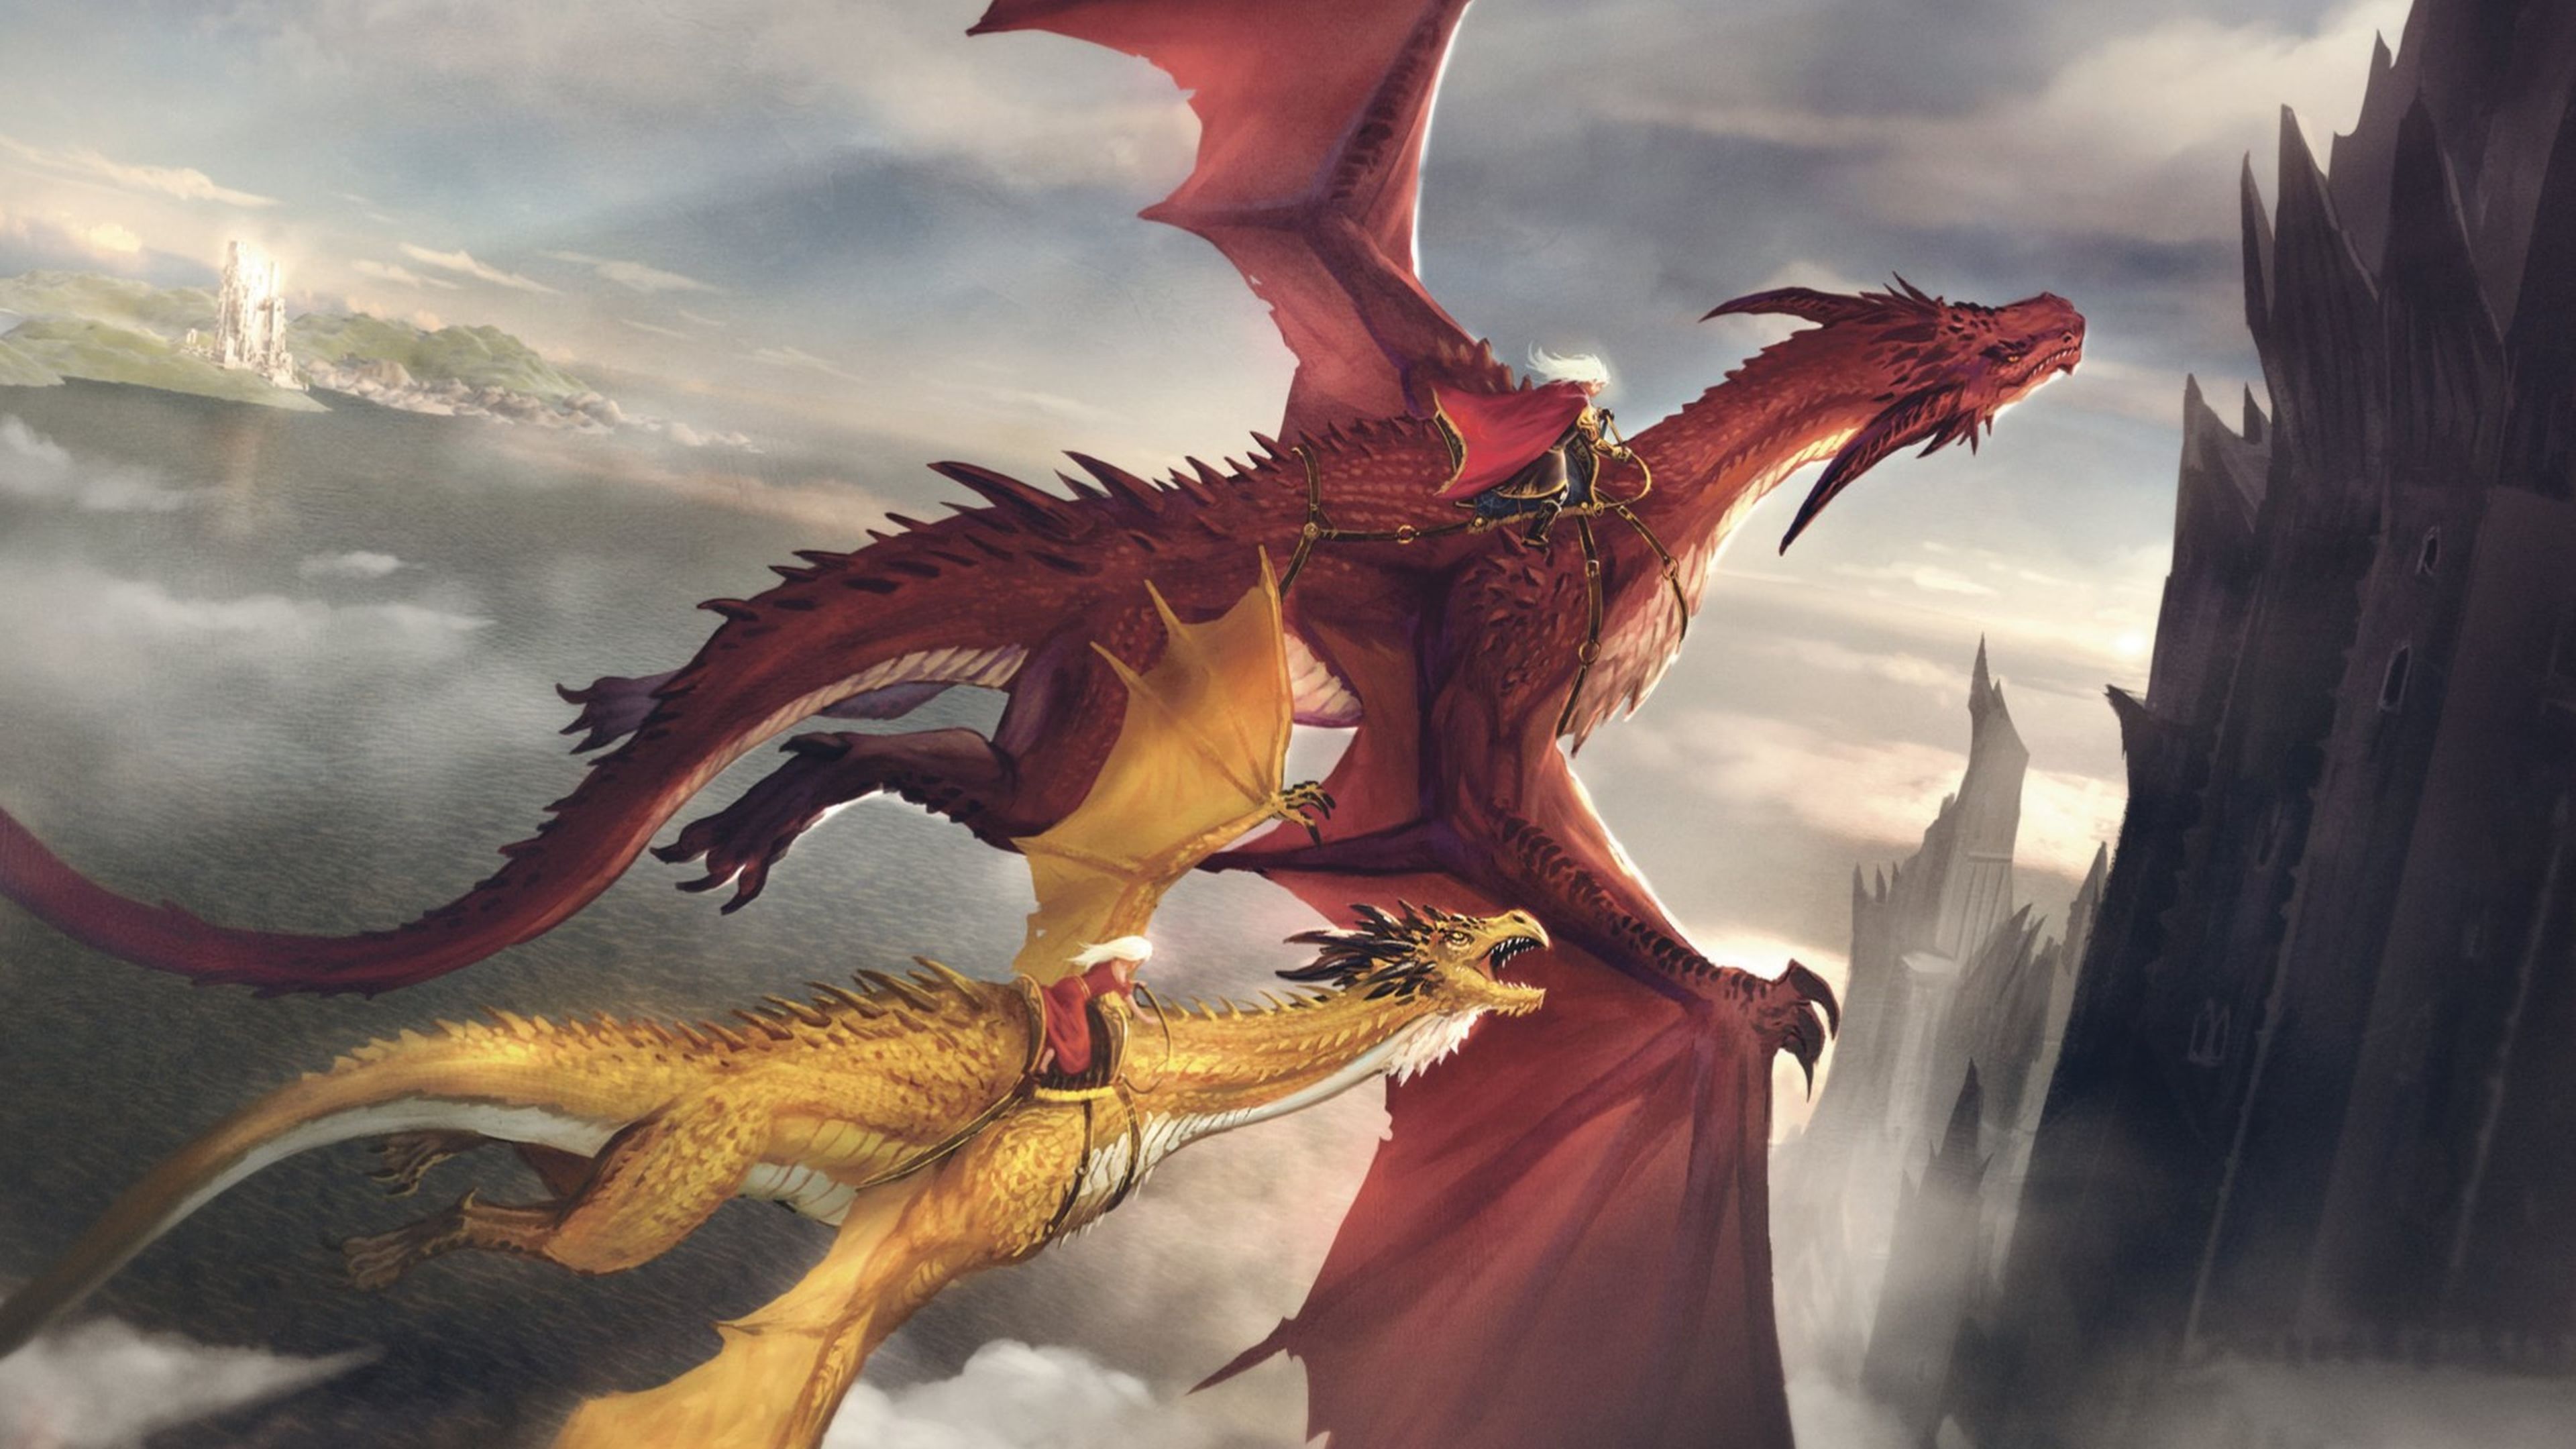 The Rise of the Dragon conta com mais de 180 artes sobre os Targaryen